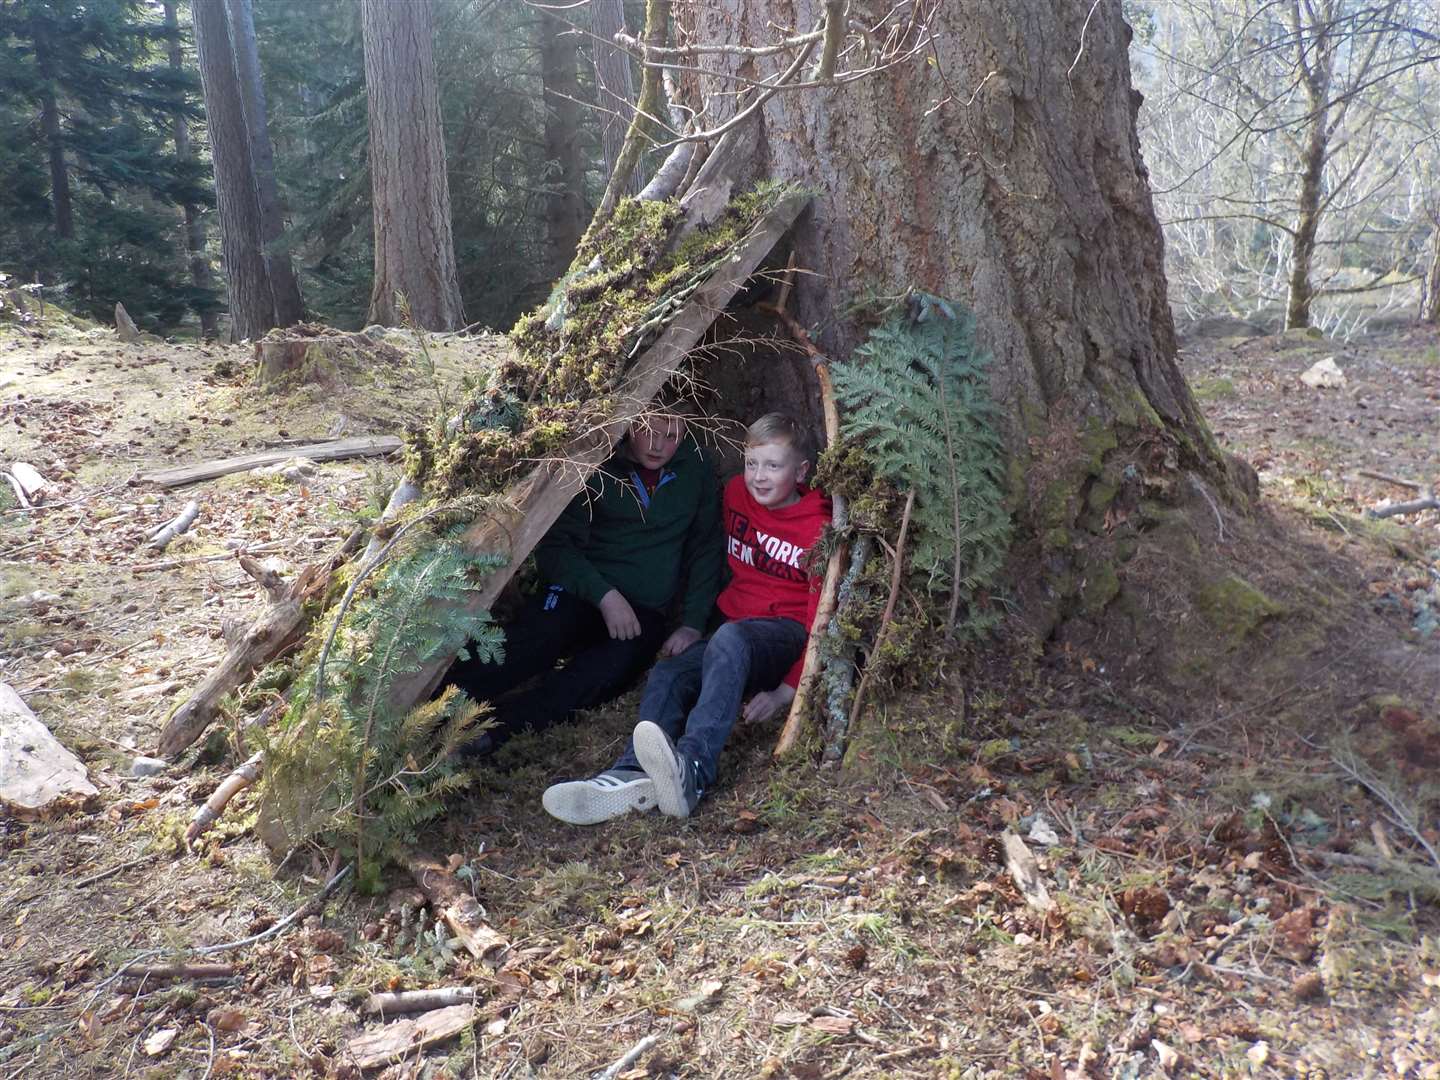 Finding shelter in a woodland den.